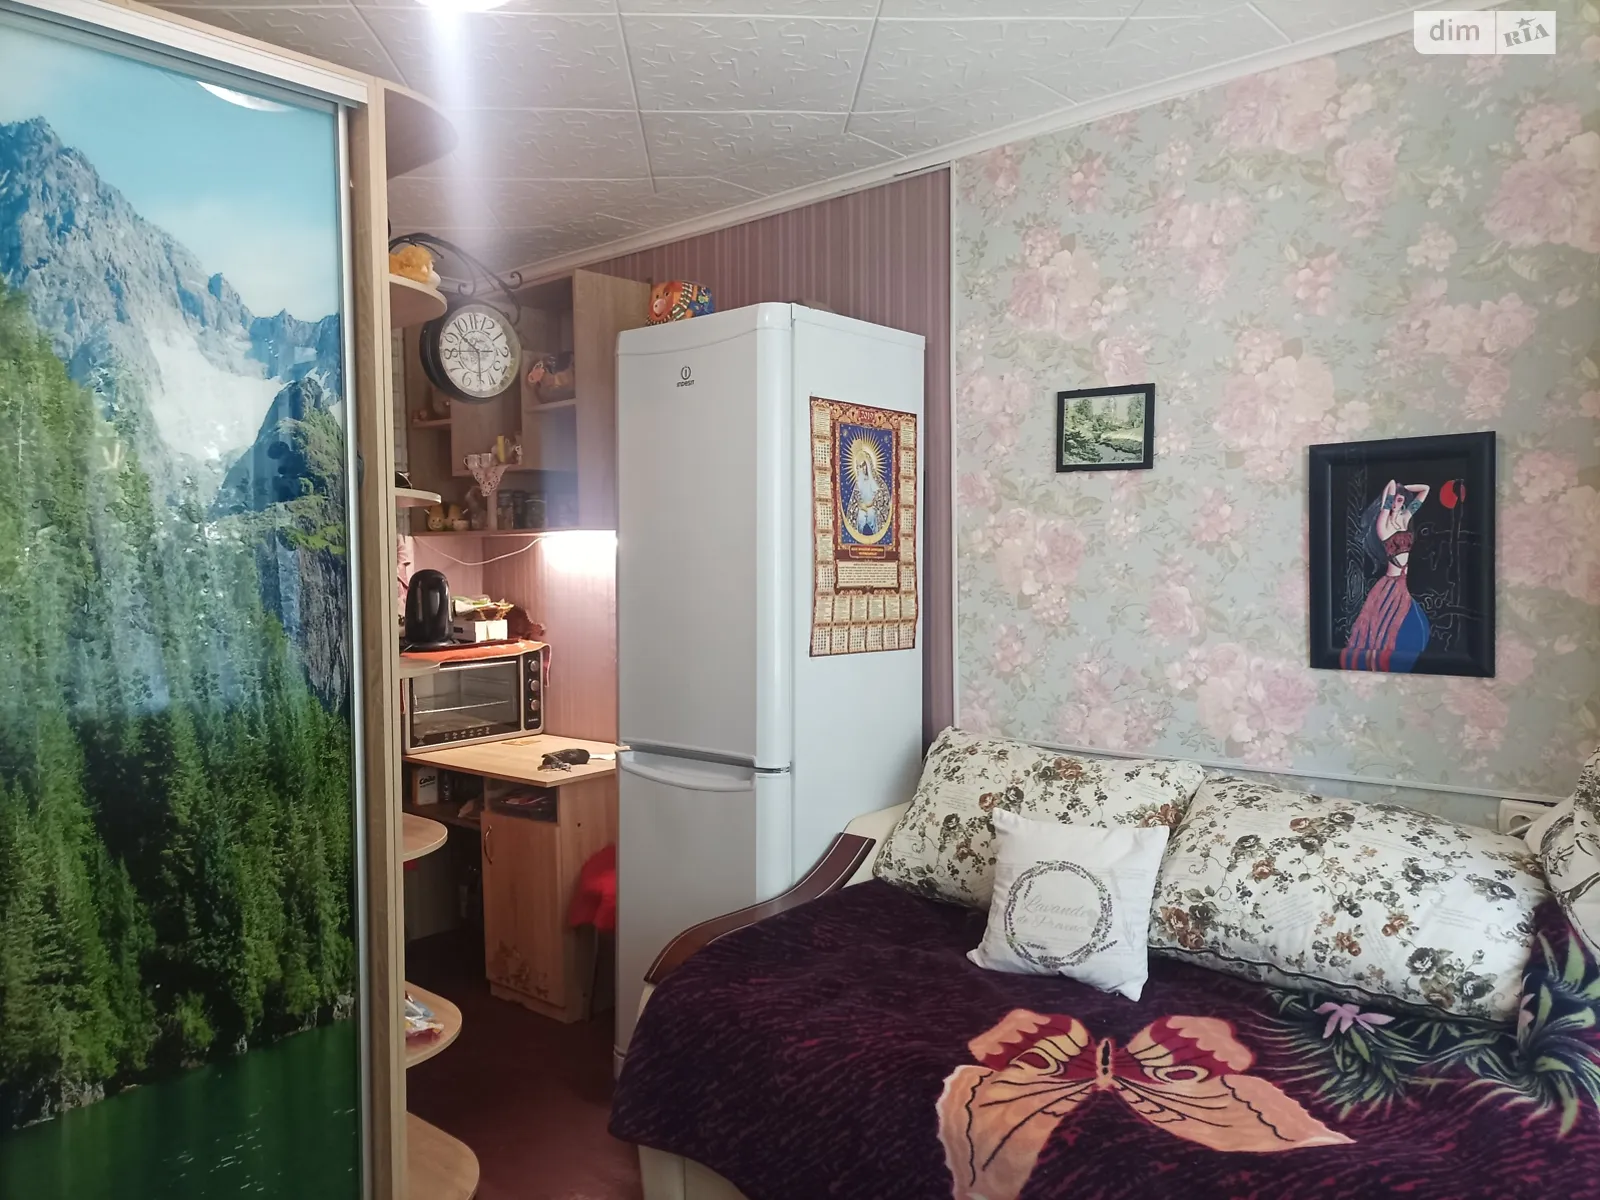 Продается комната 18 кв. м в Черноморске, цена: 8500 $ - фото 1